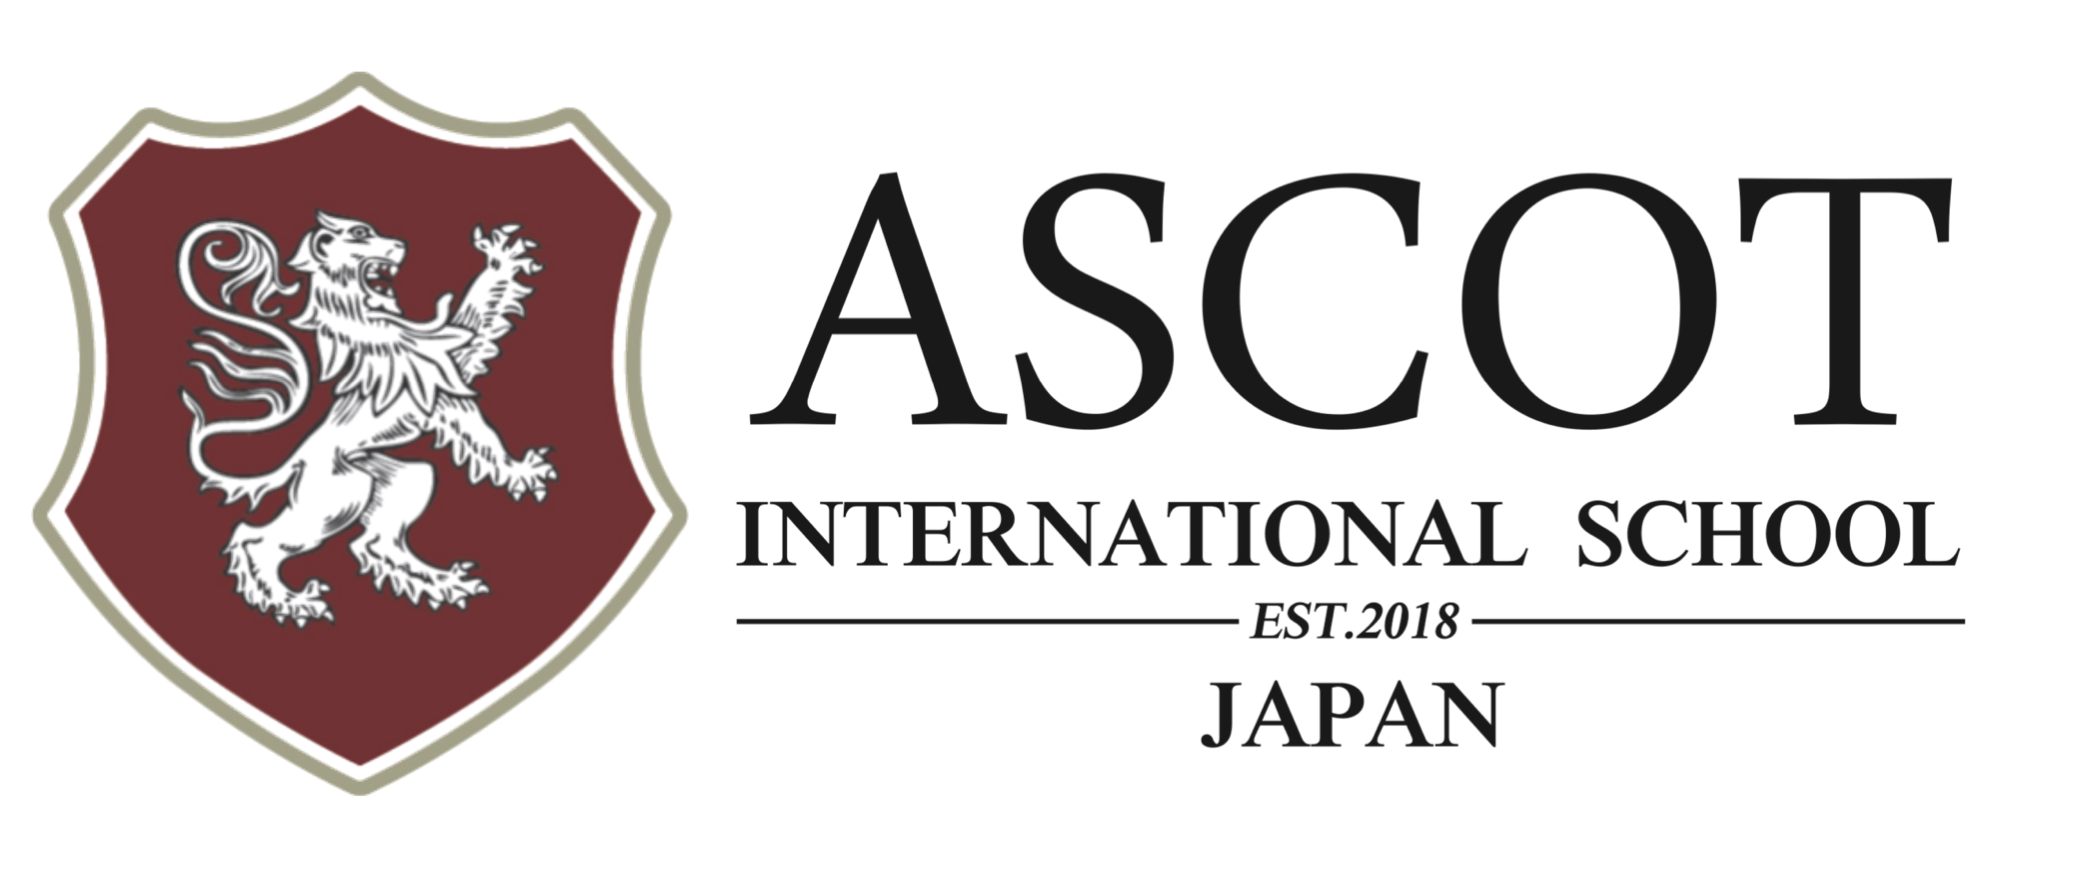 Ascot International School Japan